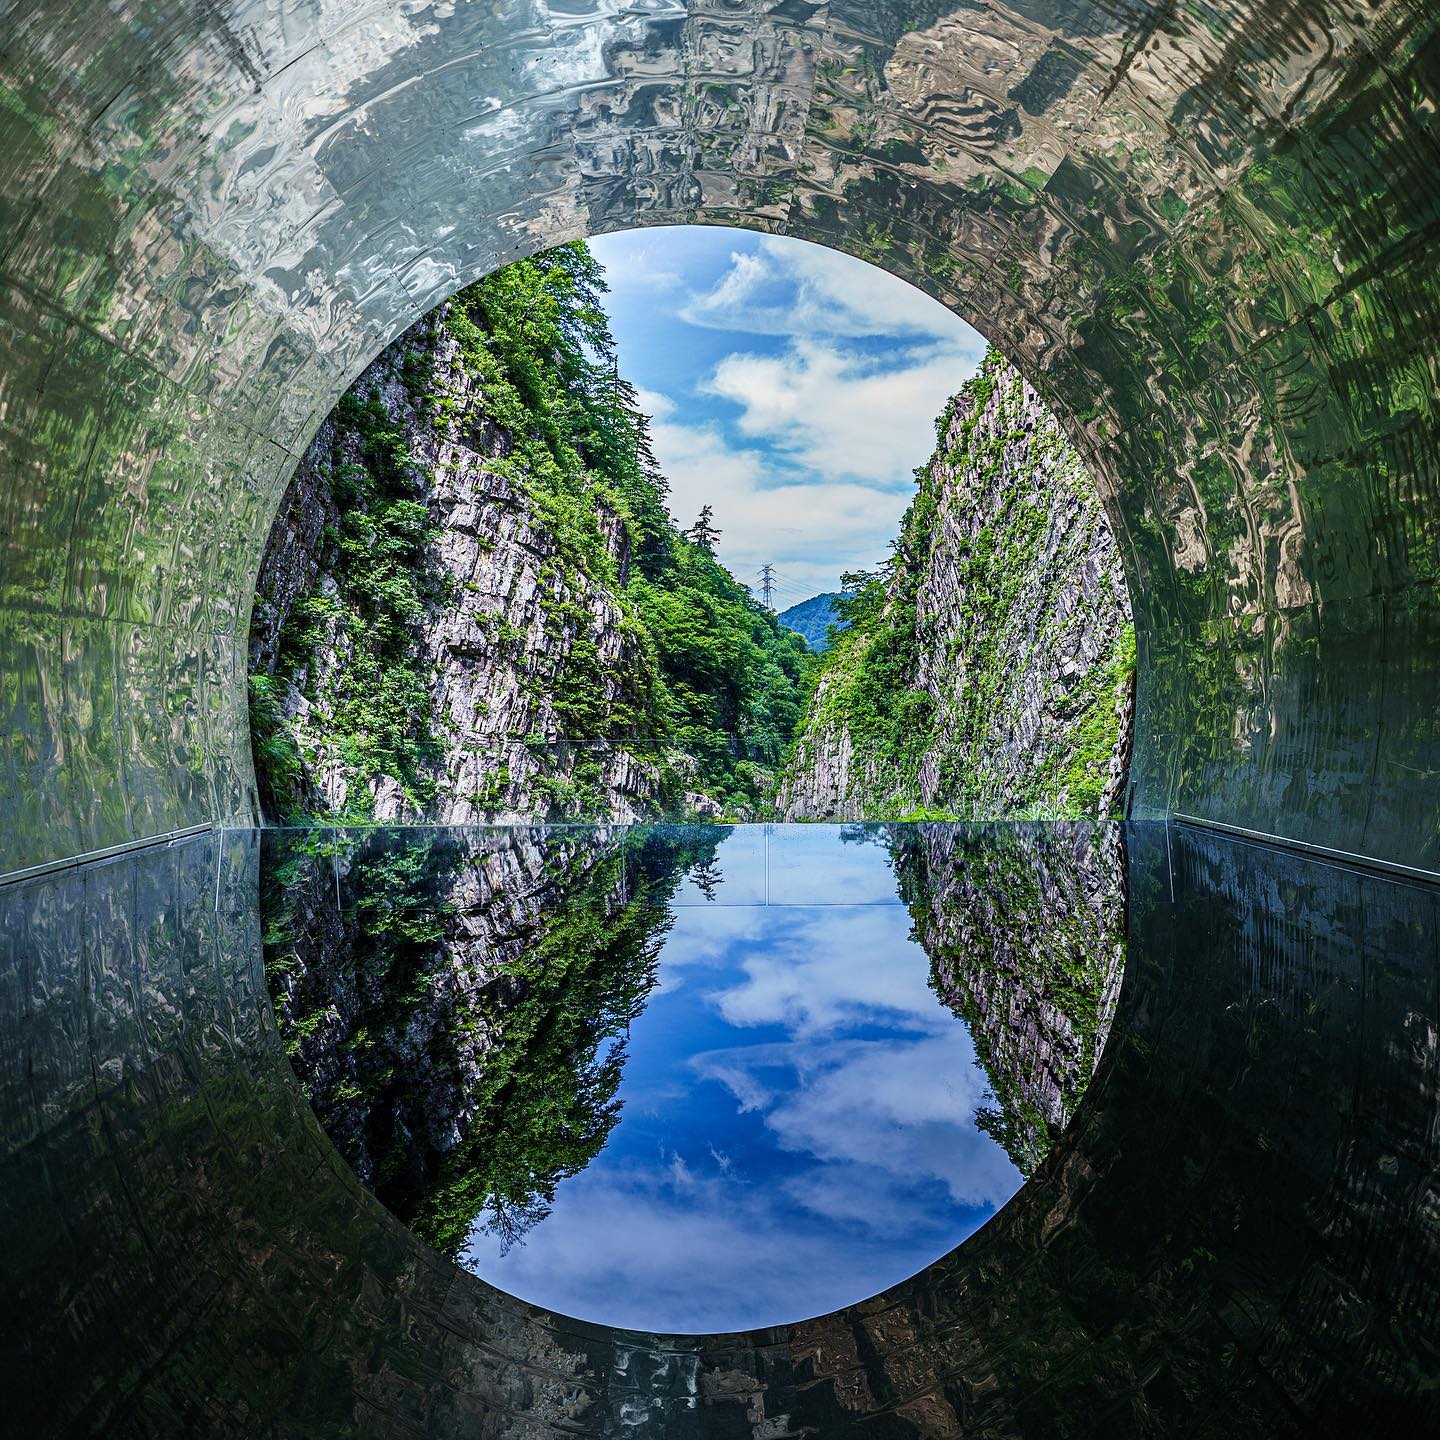 kiyotsu gorge - reflection at end of tunnel